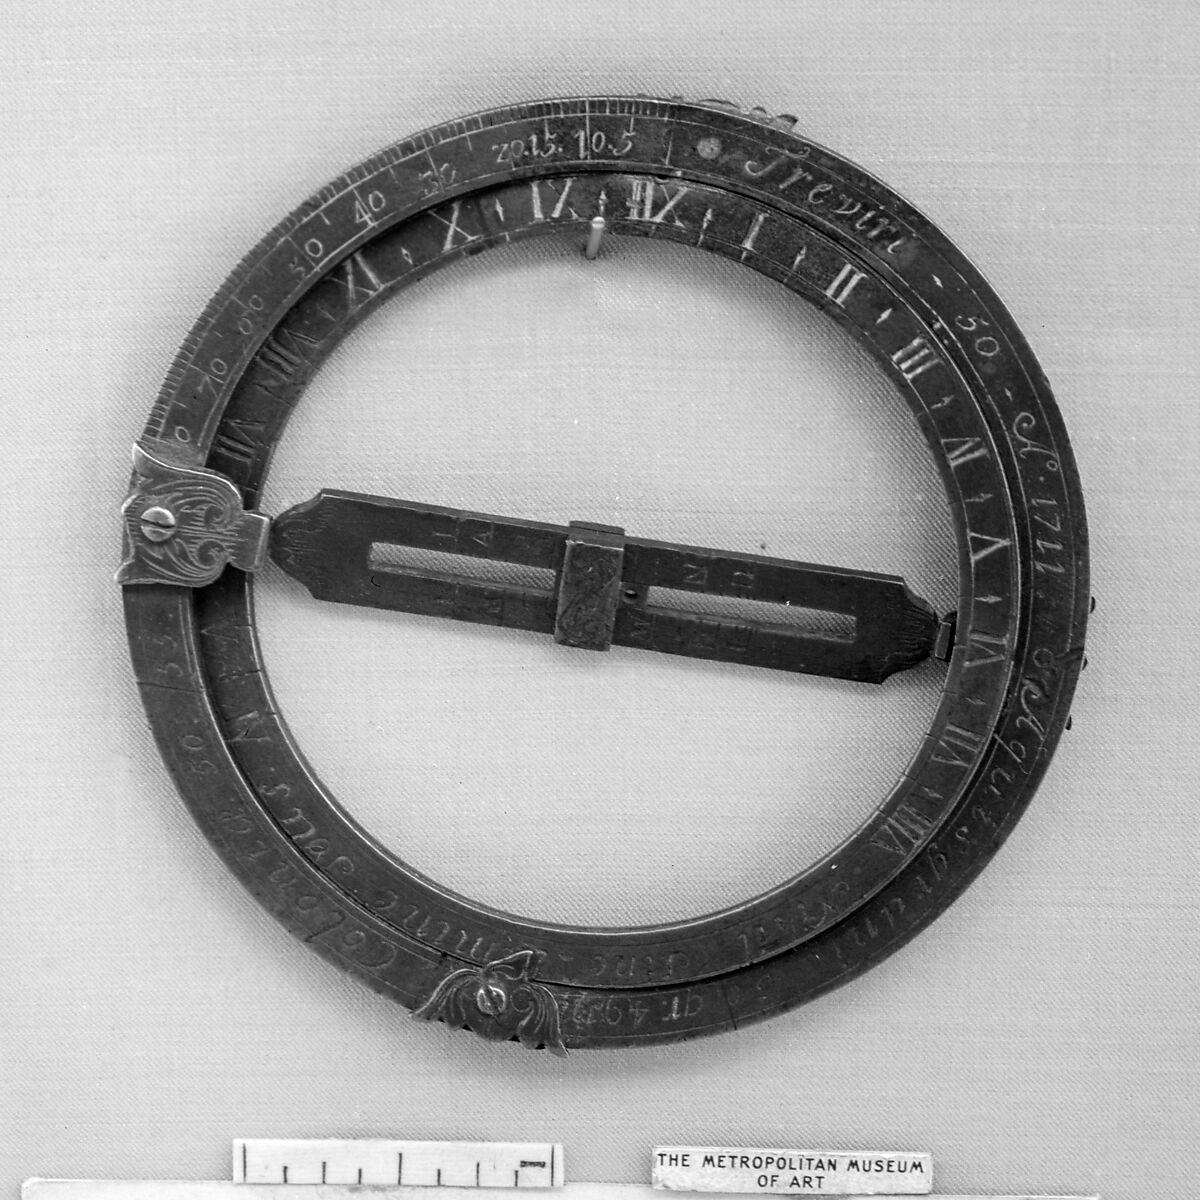 Universal ring sundial, Brass, probably German 